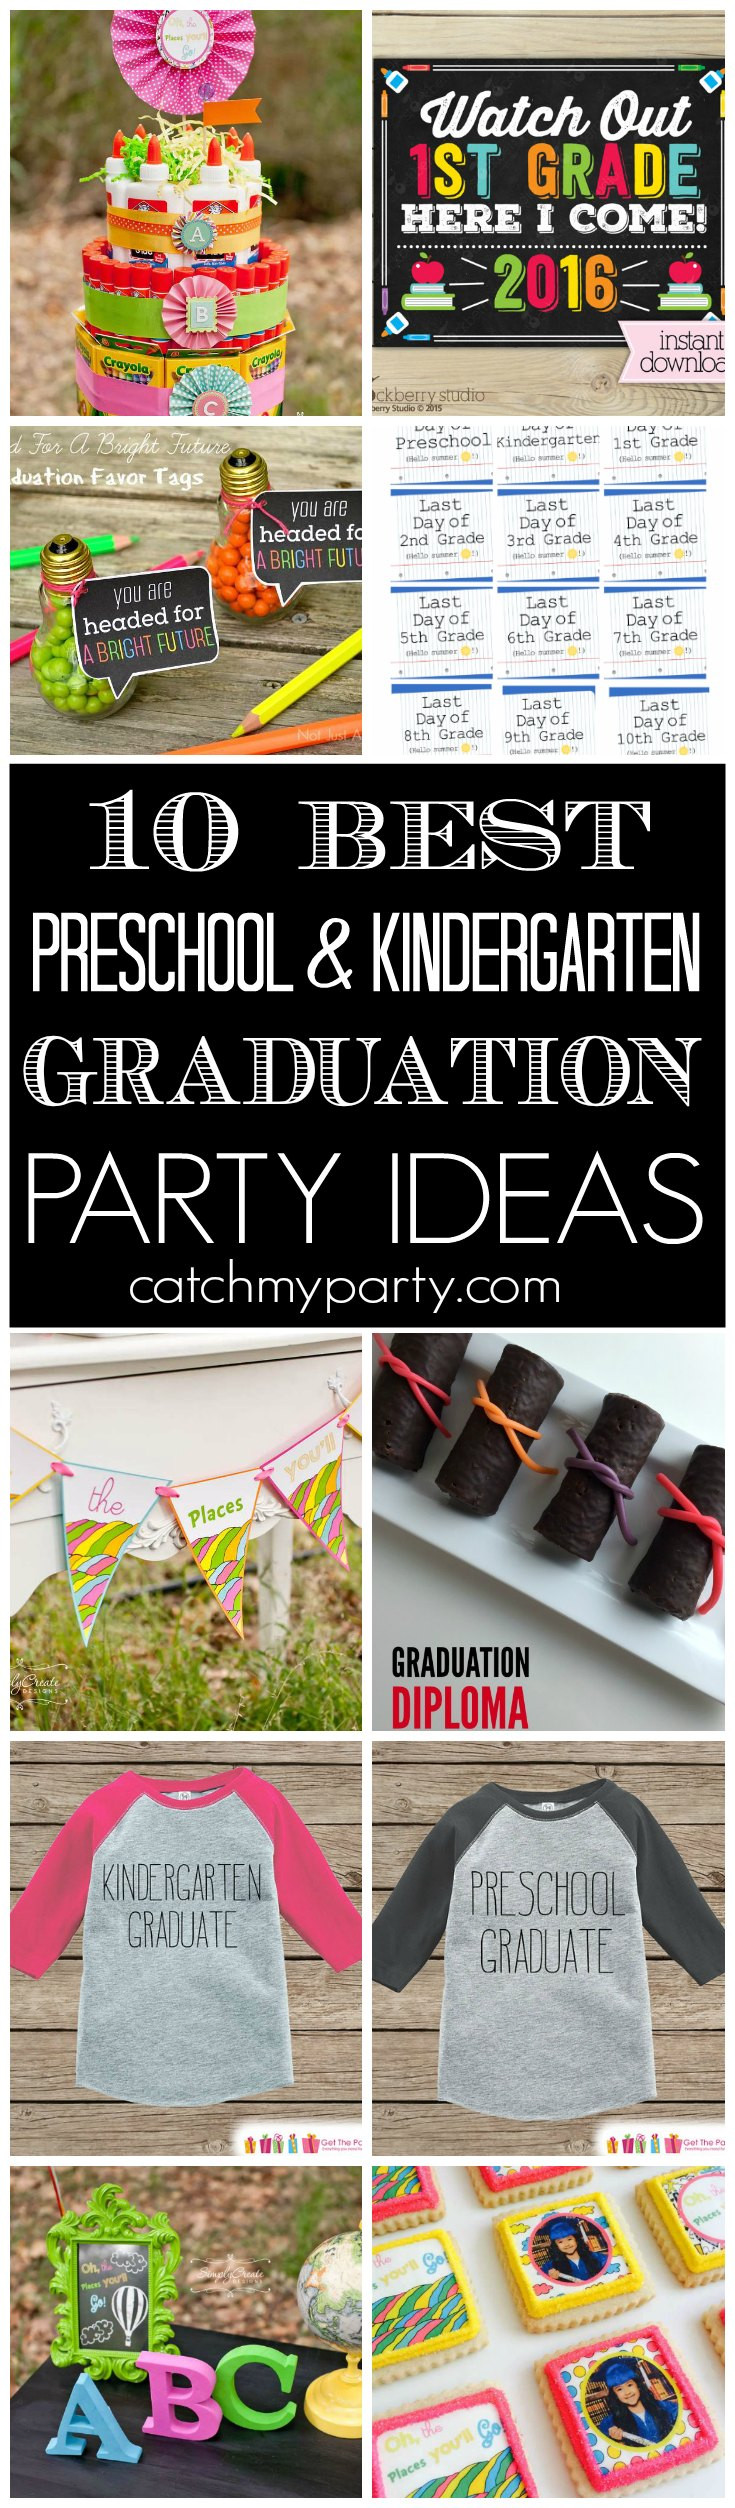 Ideas For Graduation Party Activities
 10 Best Preschool & Kindergarten Graduation Party Ideas